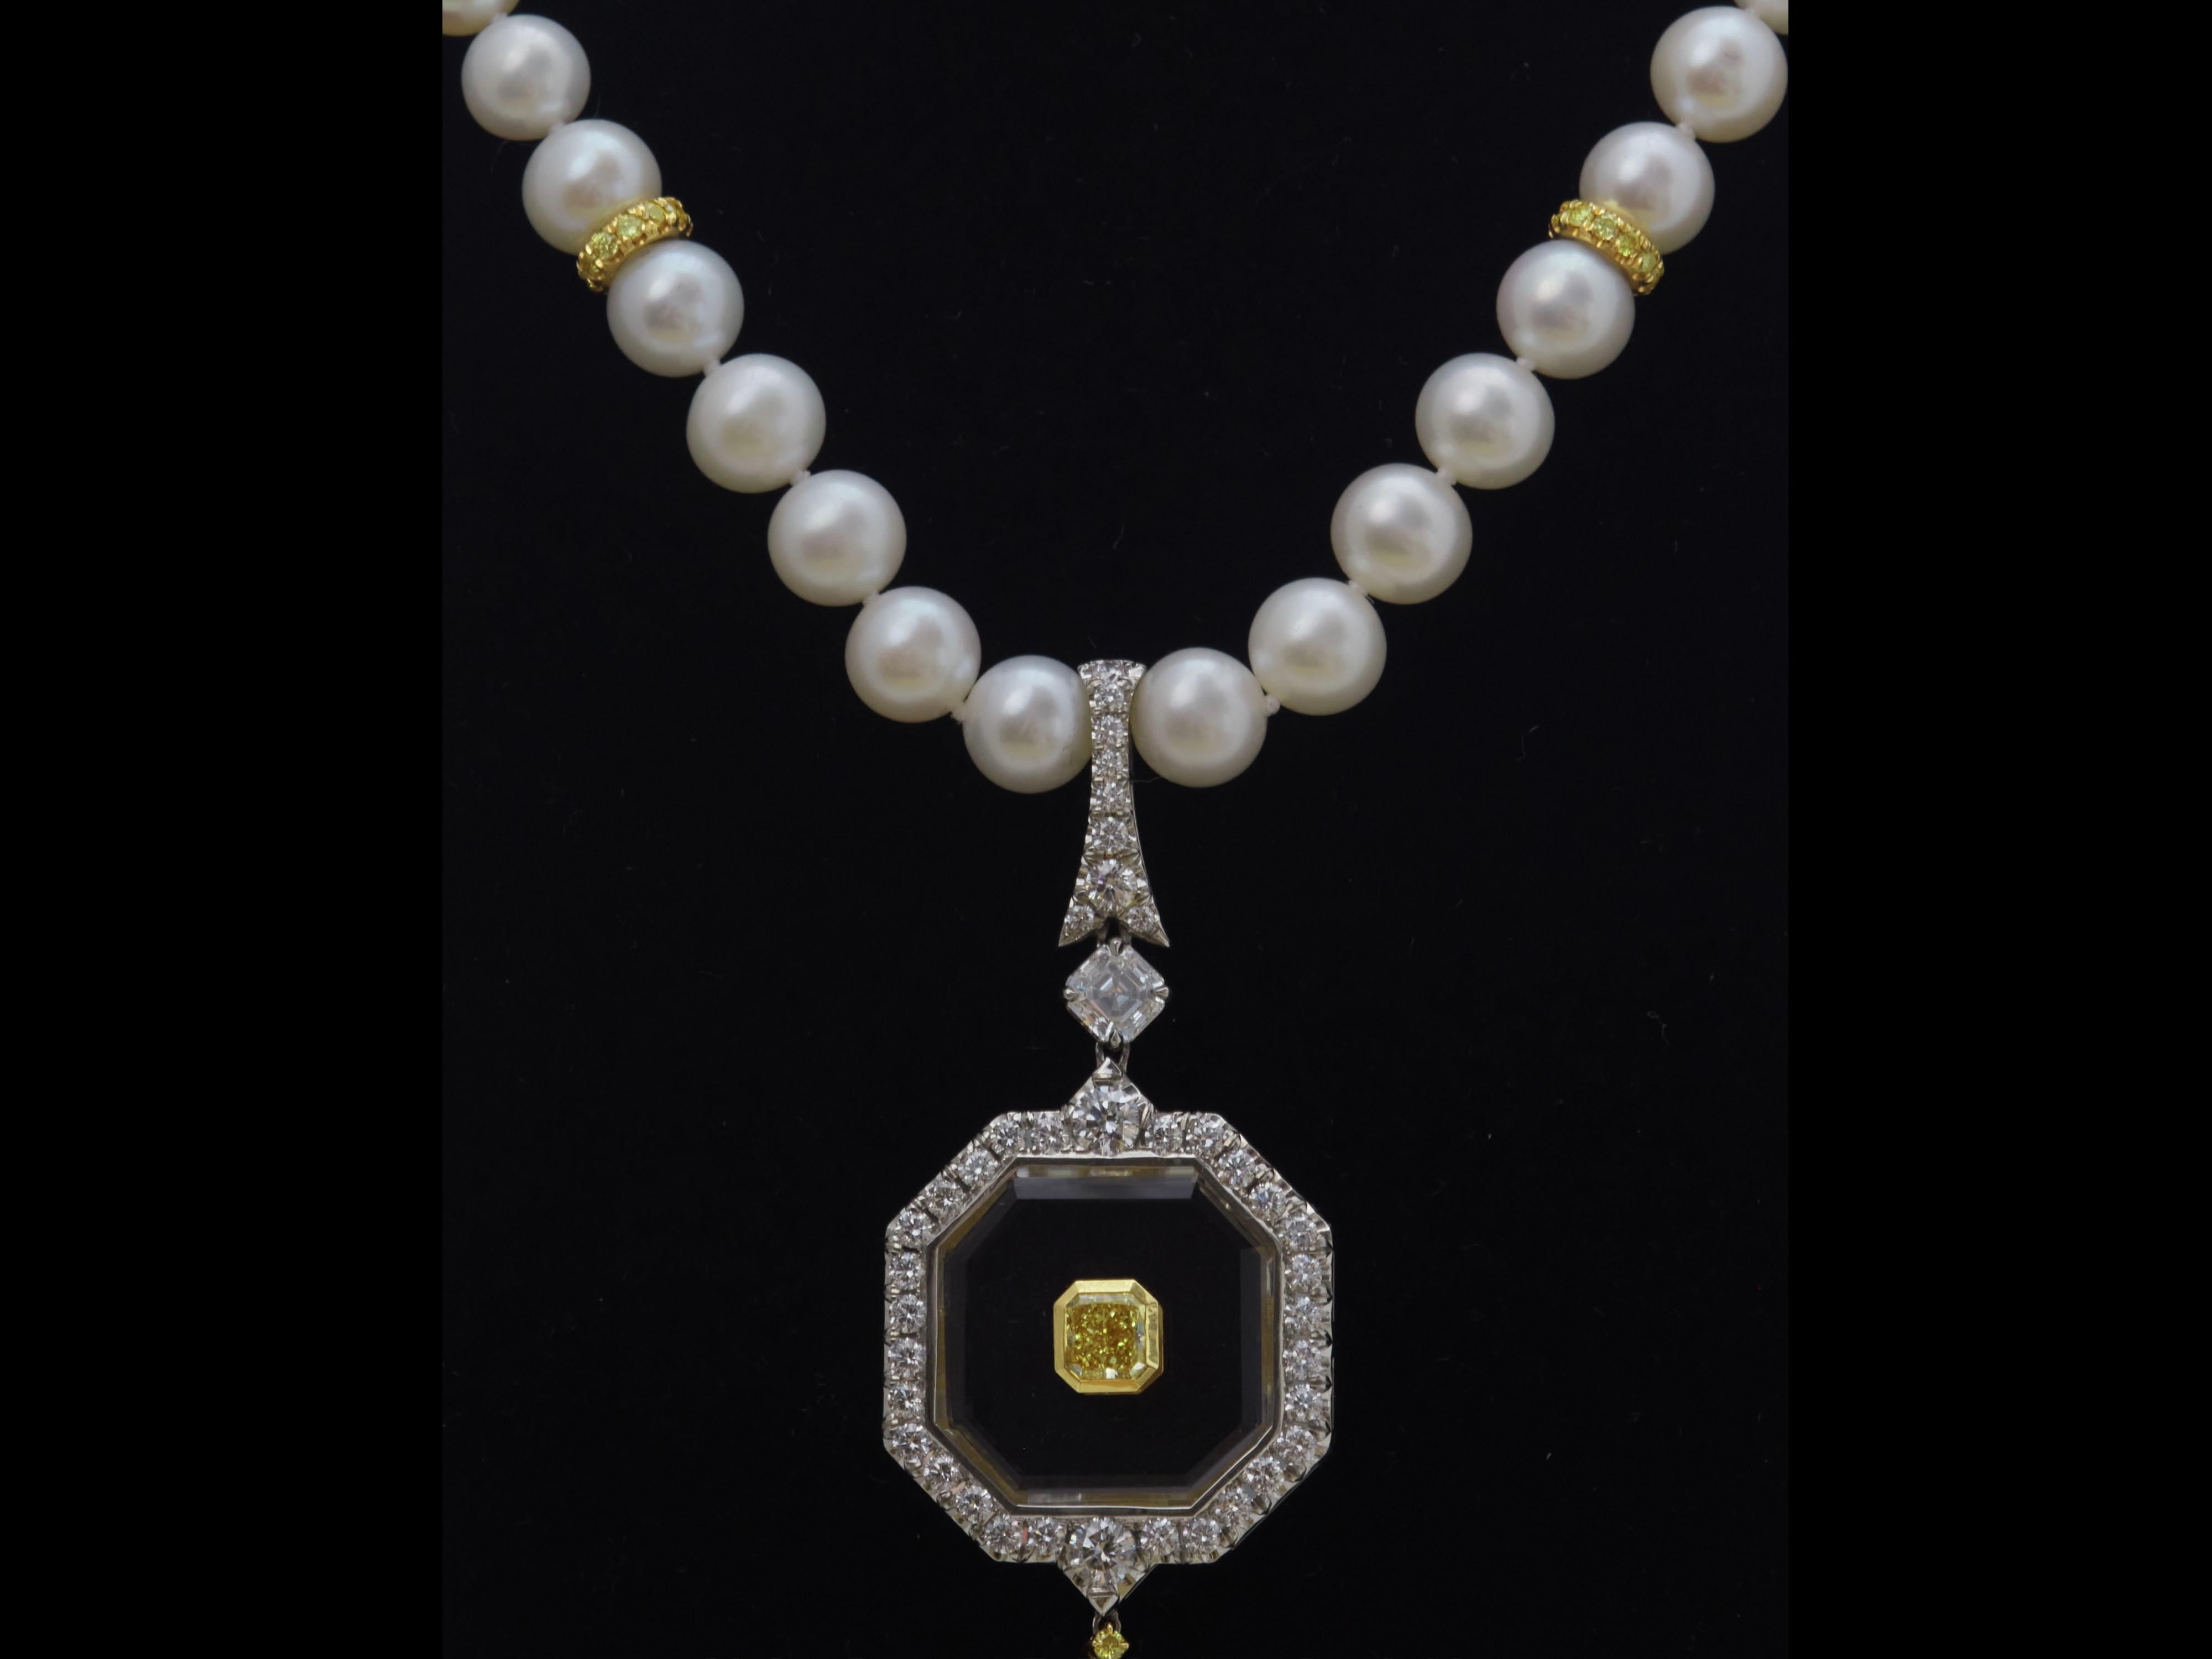 Radiant Cut 10.36 Carat Vivid Yellow & White Diamonds & Pearls Tassel Necklace, 18K Gold For Sale